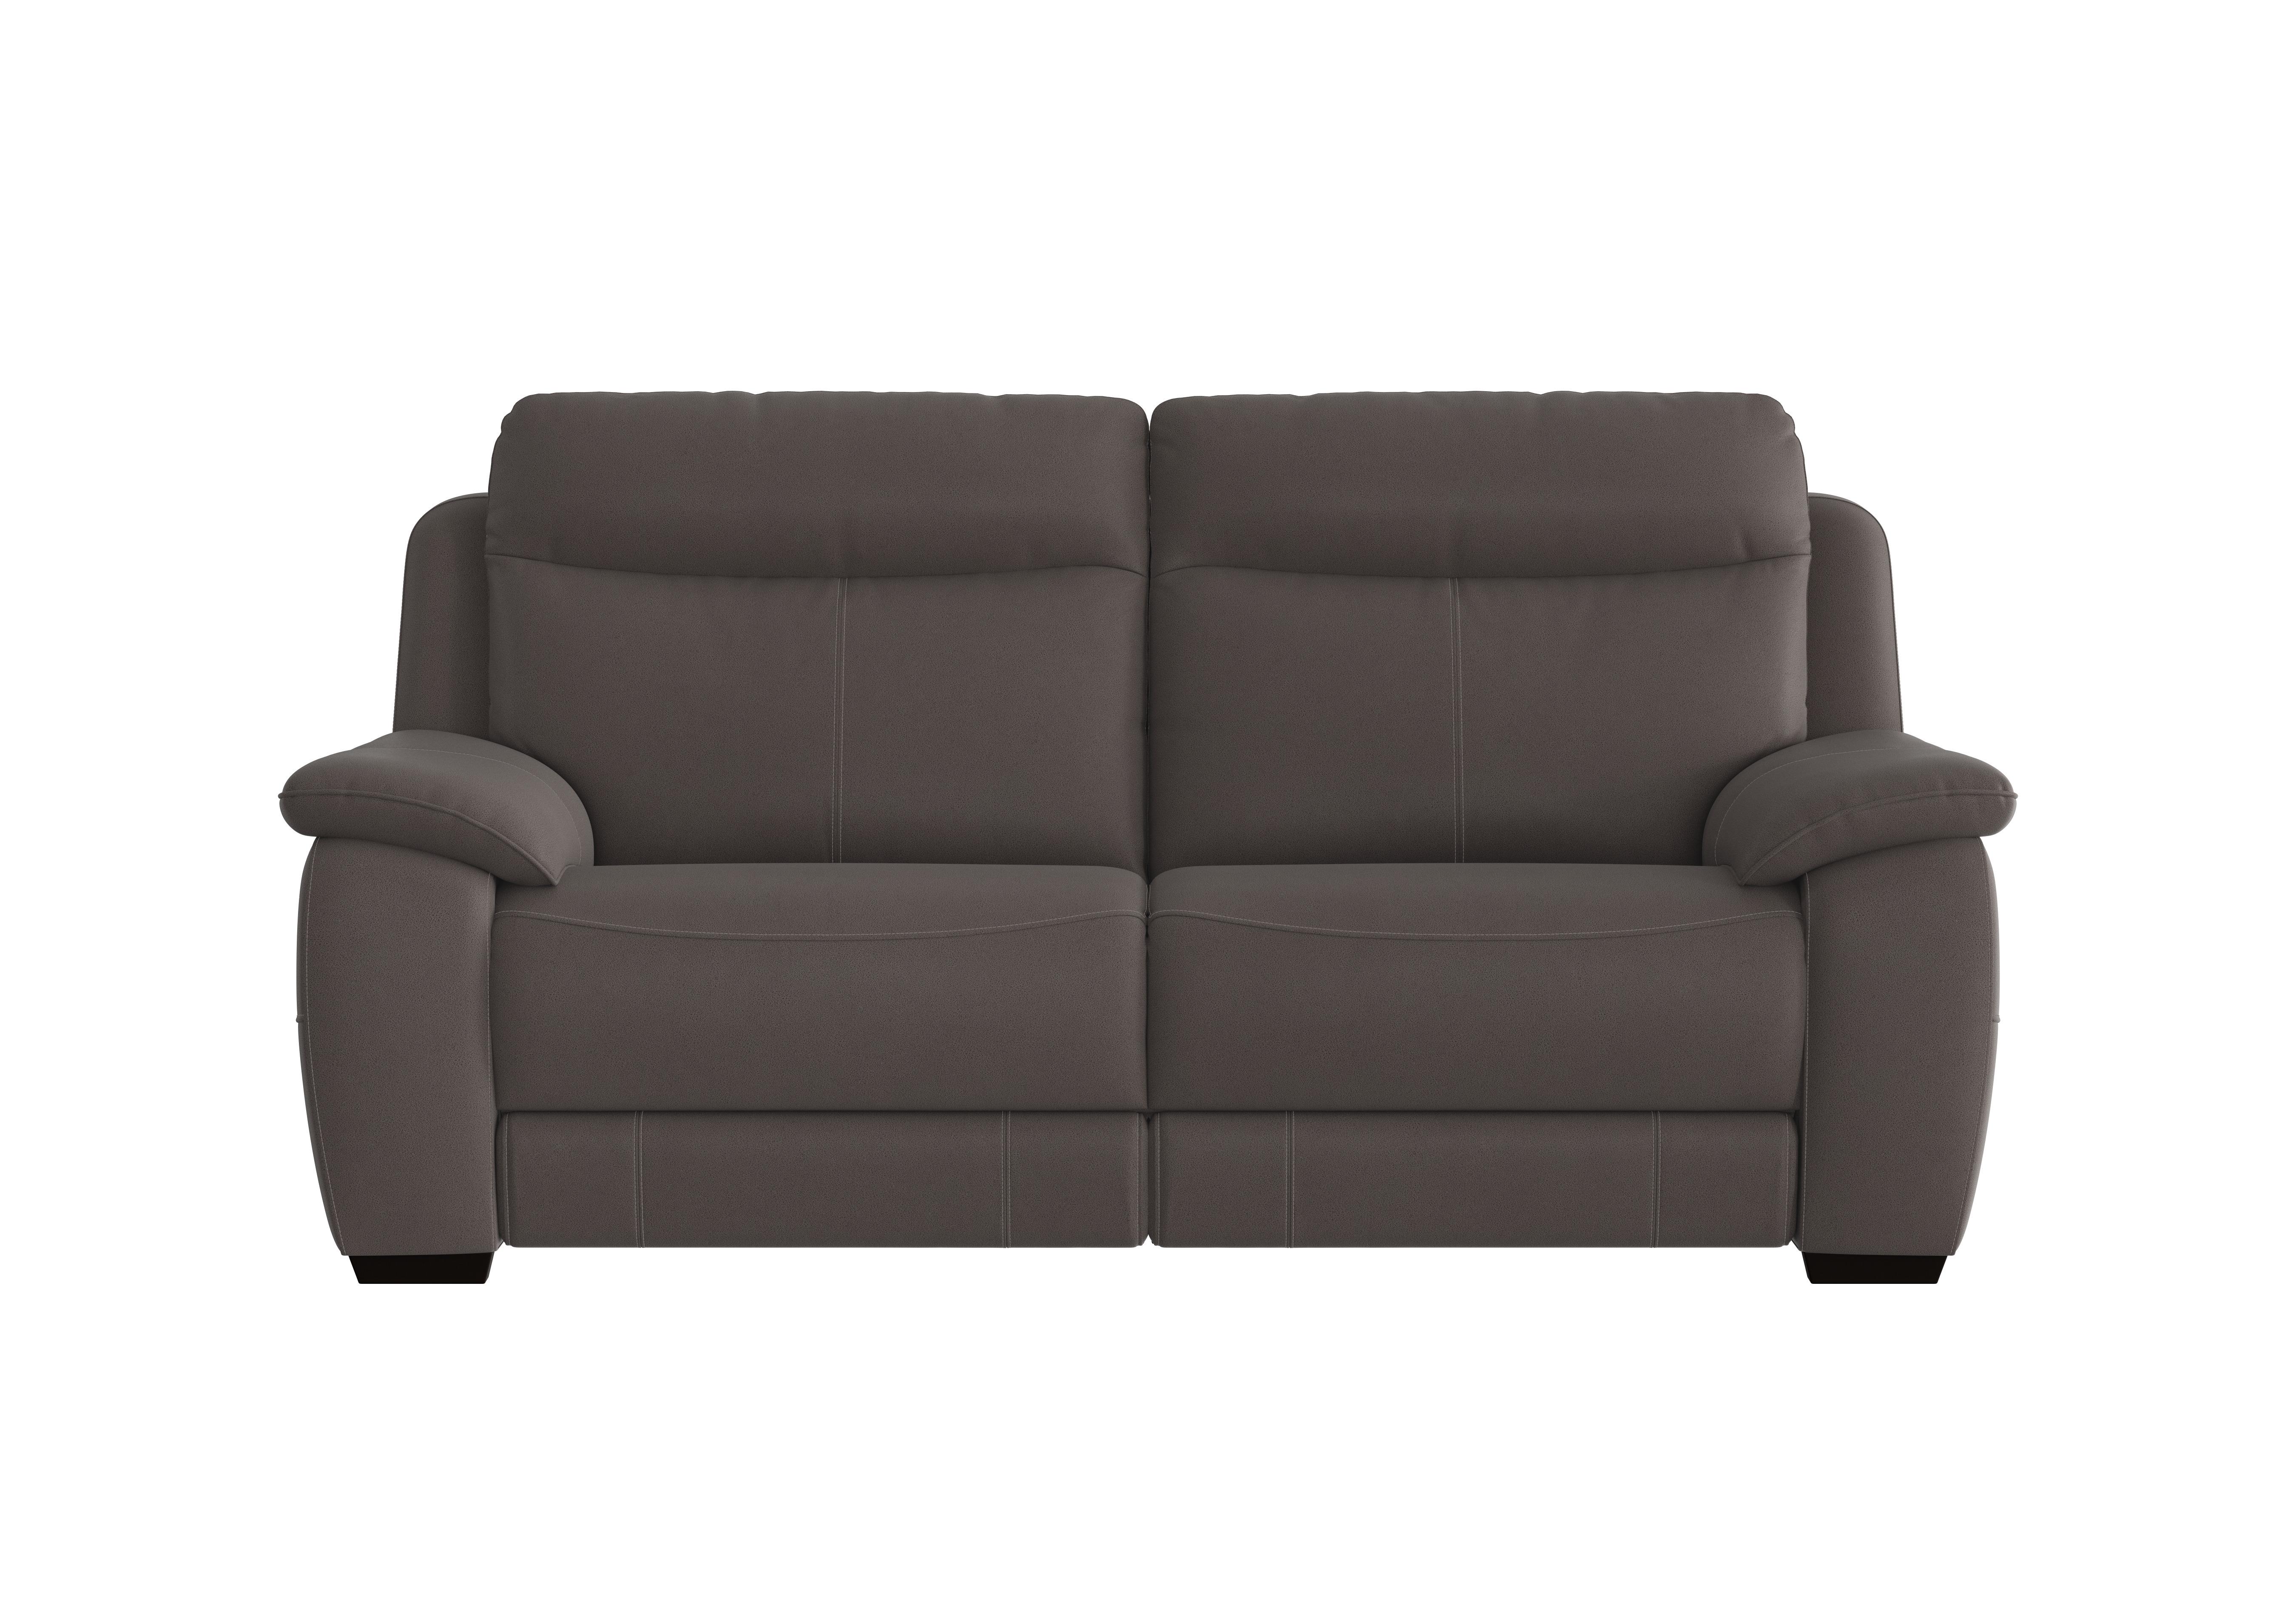 Starlight Express 3 Seater Fabric Sofa in Bfa-Blj-R16 Grey on Furniture Village